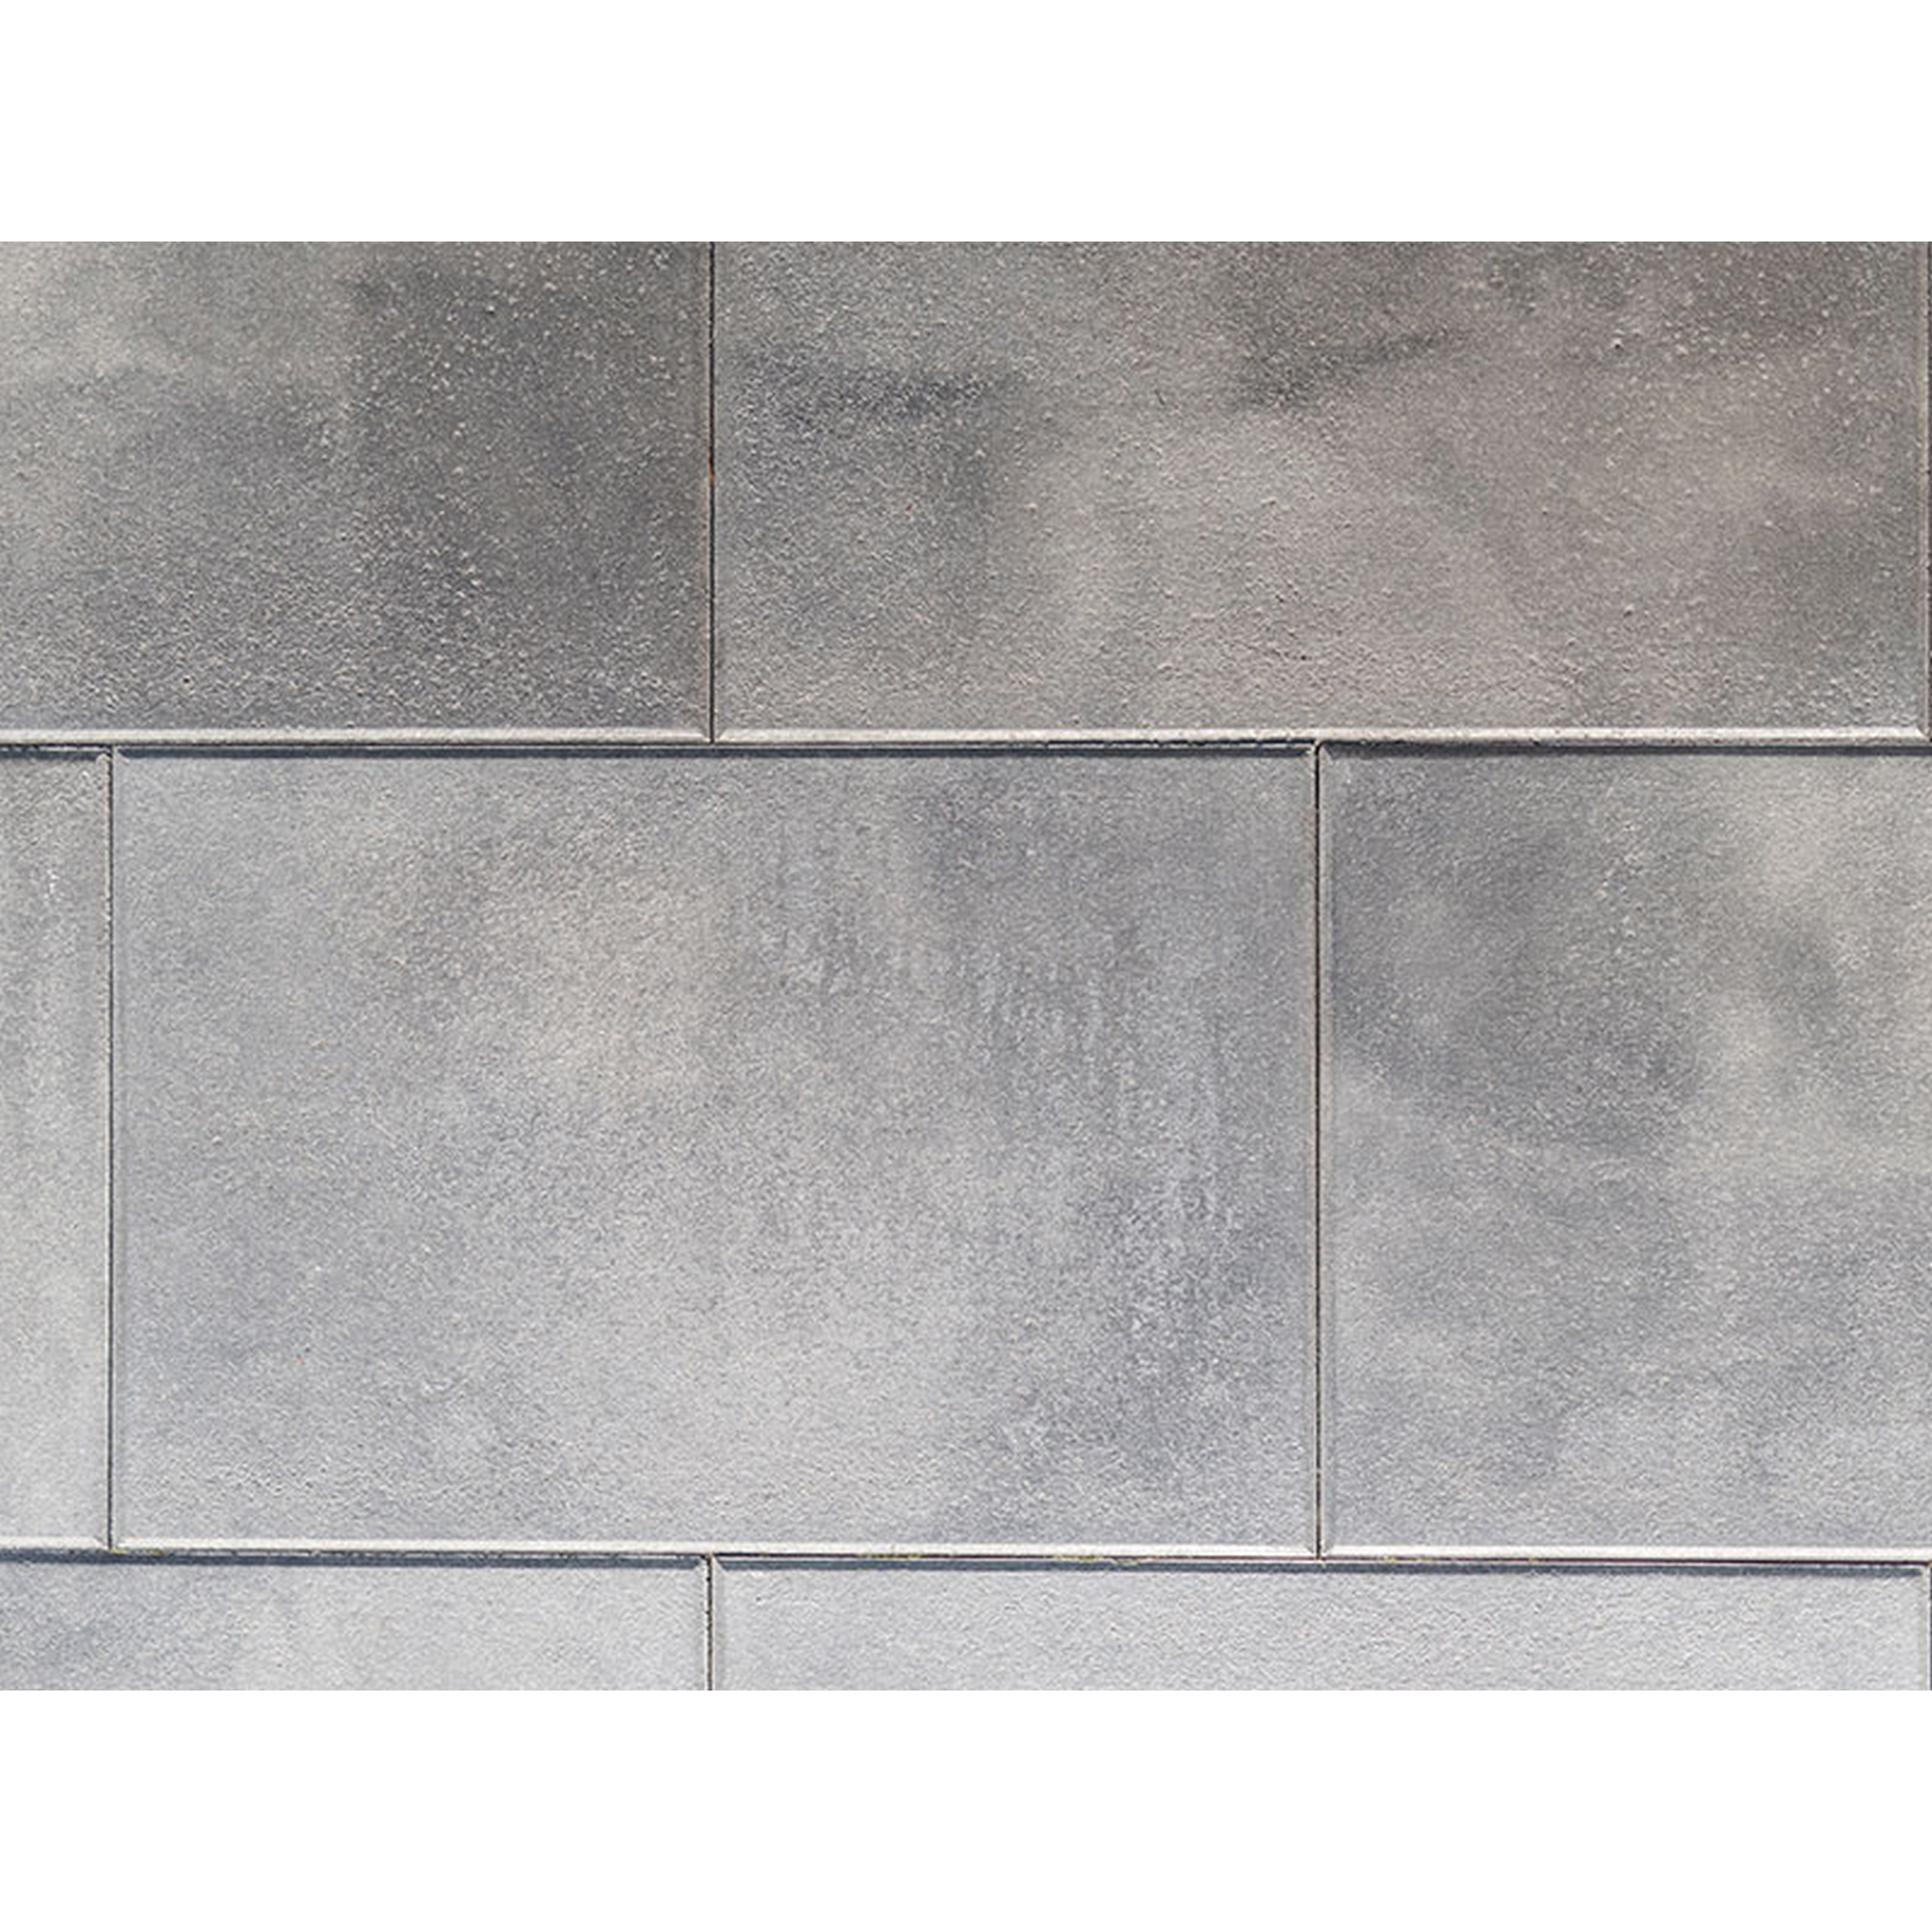 Terrassenplatte 'T-Court Protect' Beton grauschwarz 40 x 60 x 4 cm + product picture